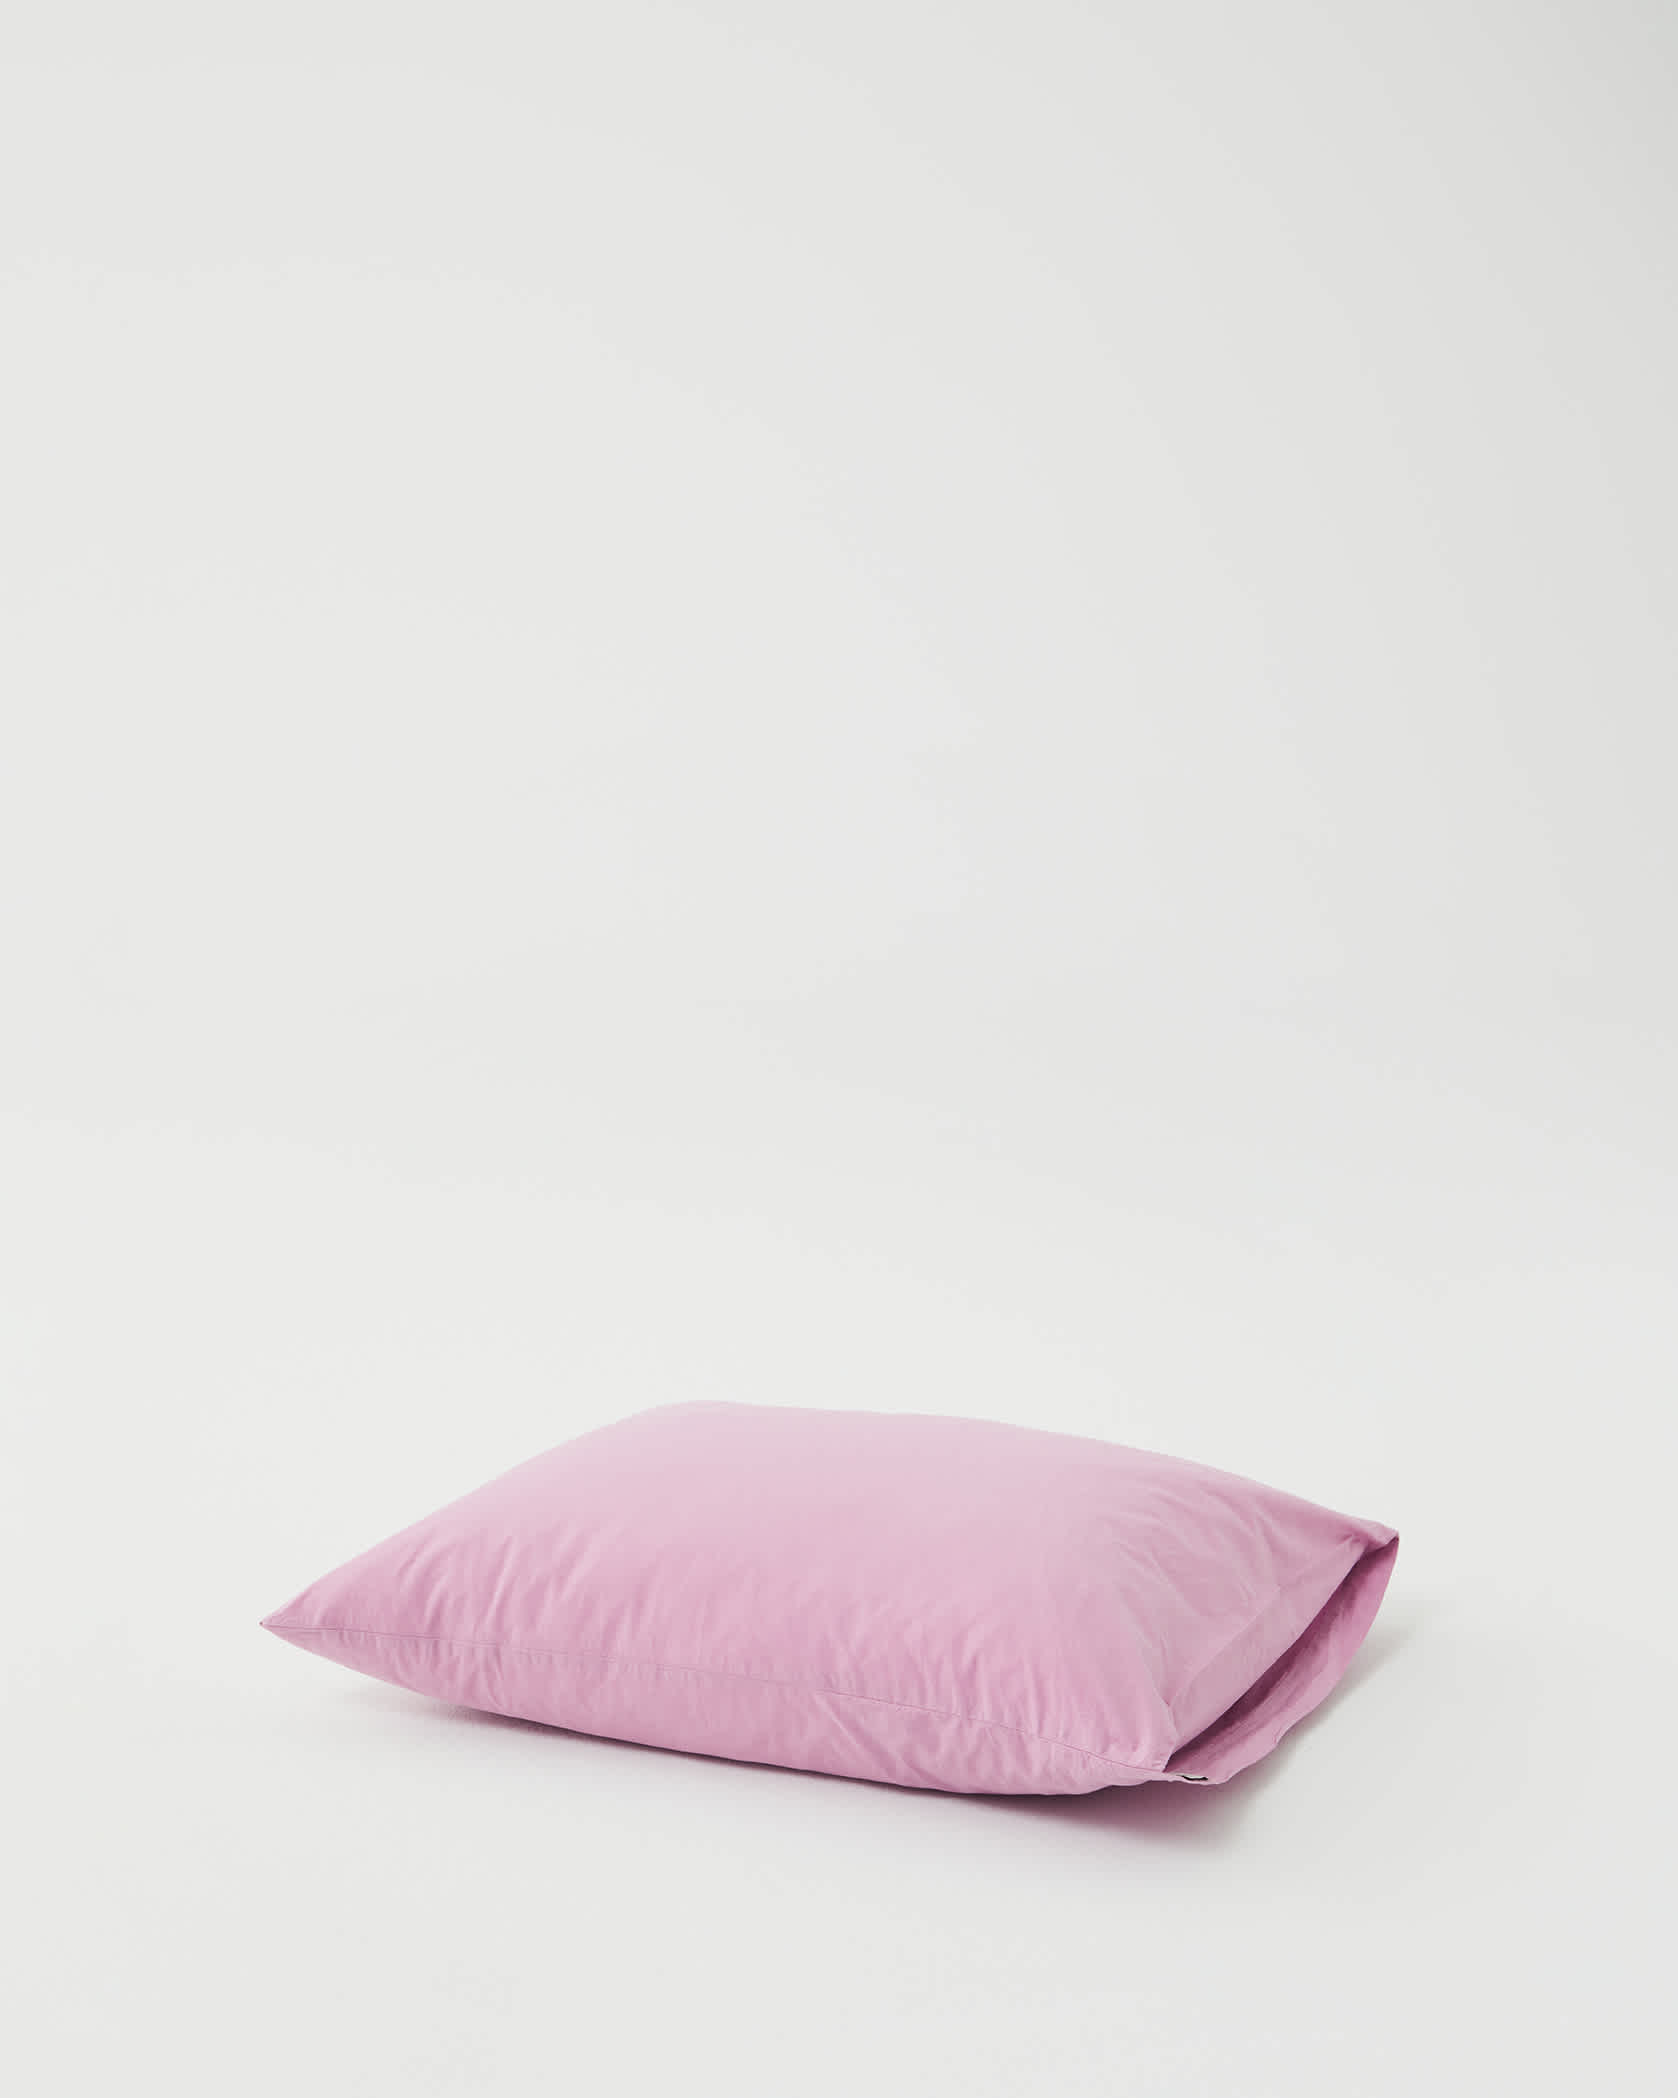 Percale - Pillow Sham - Mallow Pink